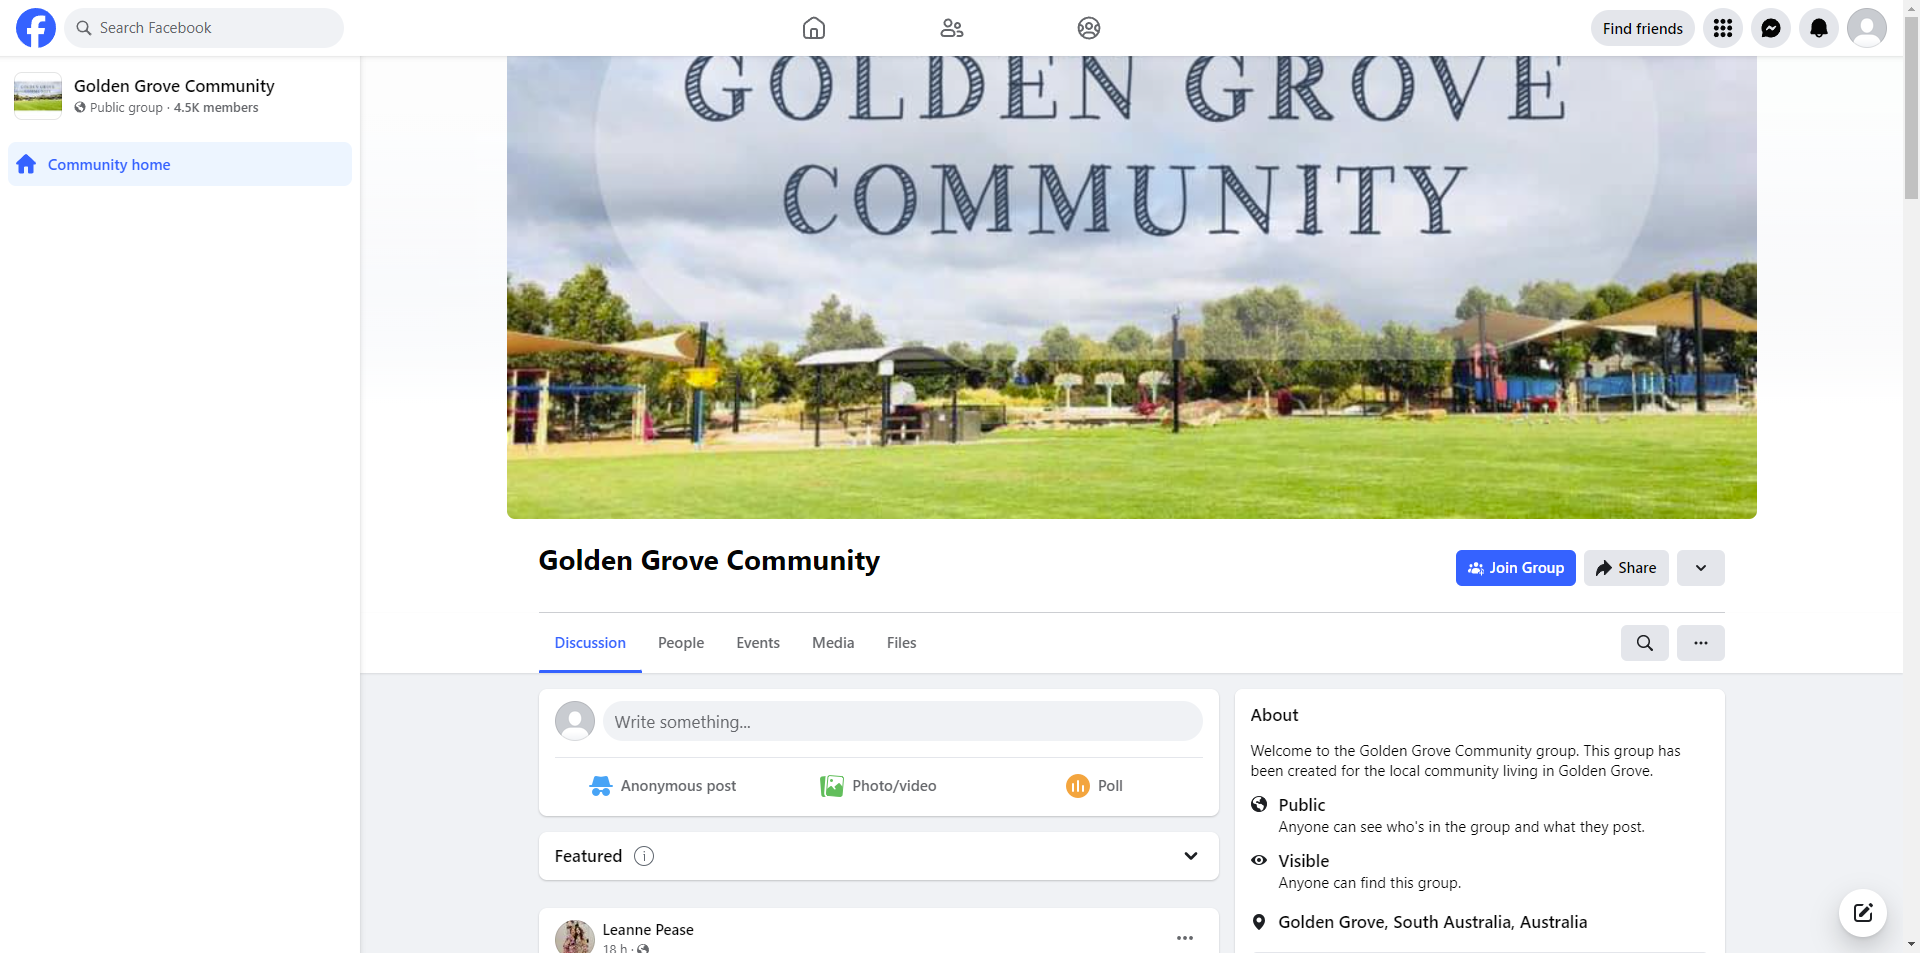 Golden Grove Community